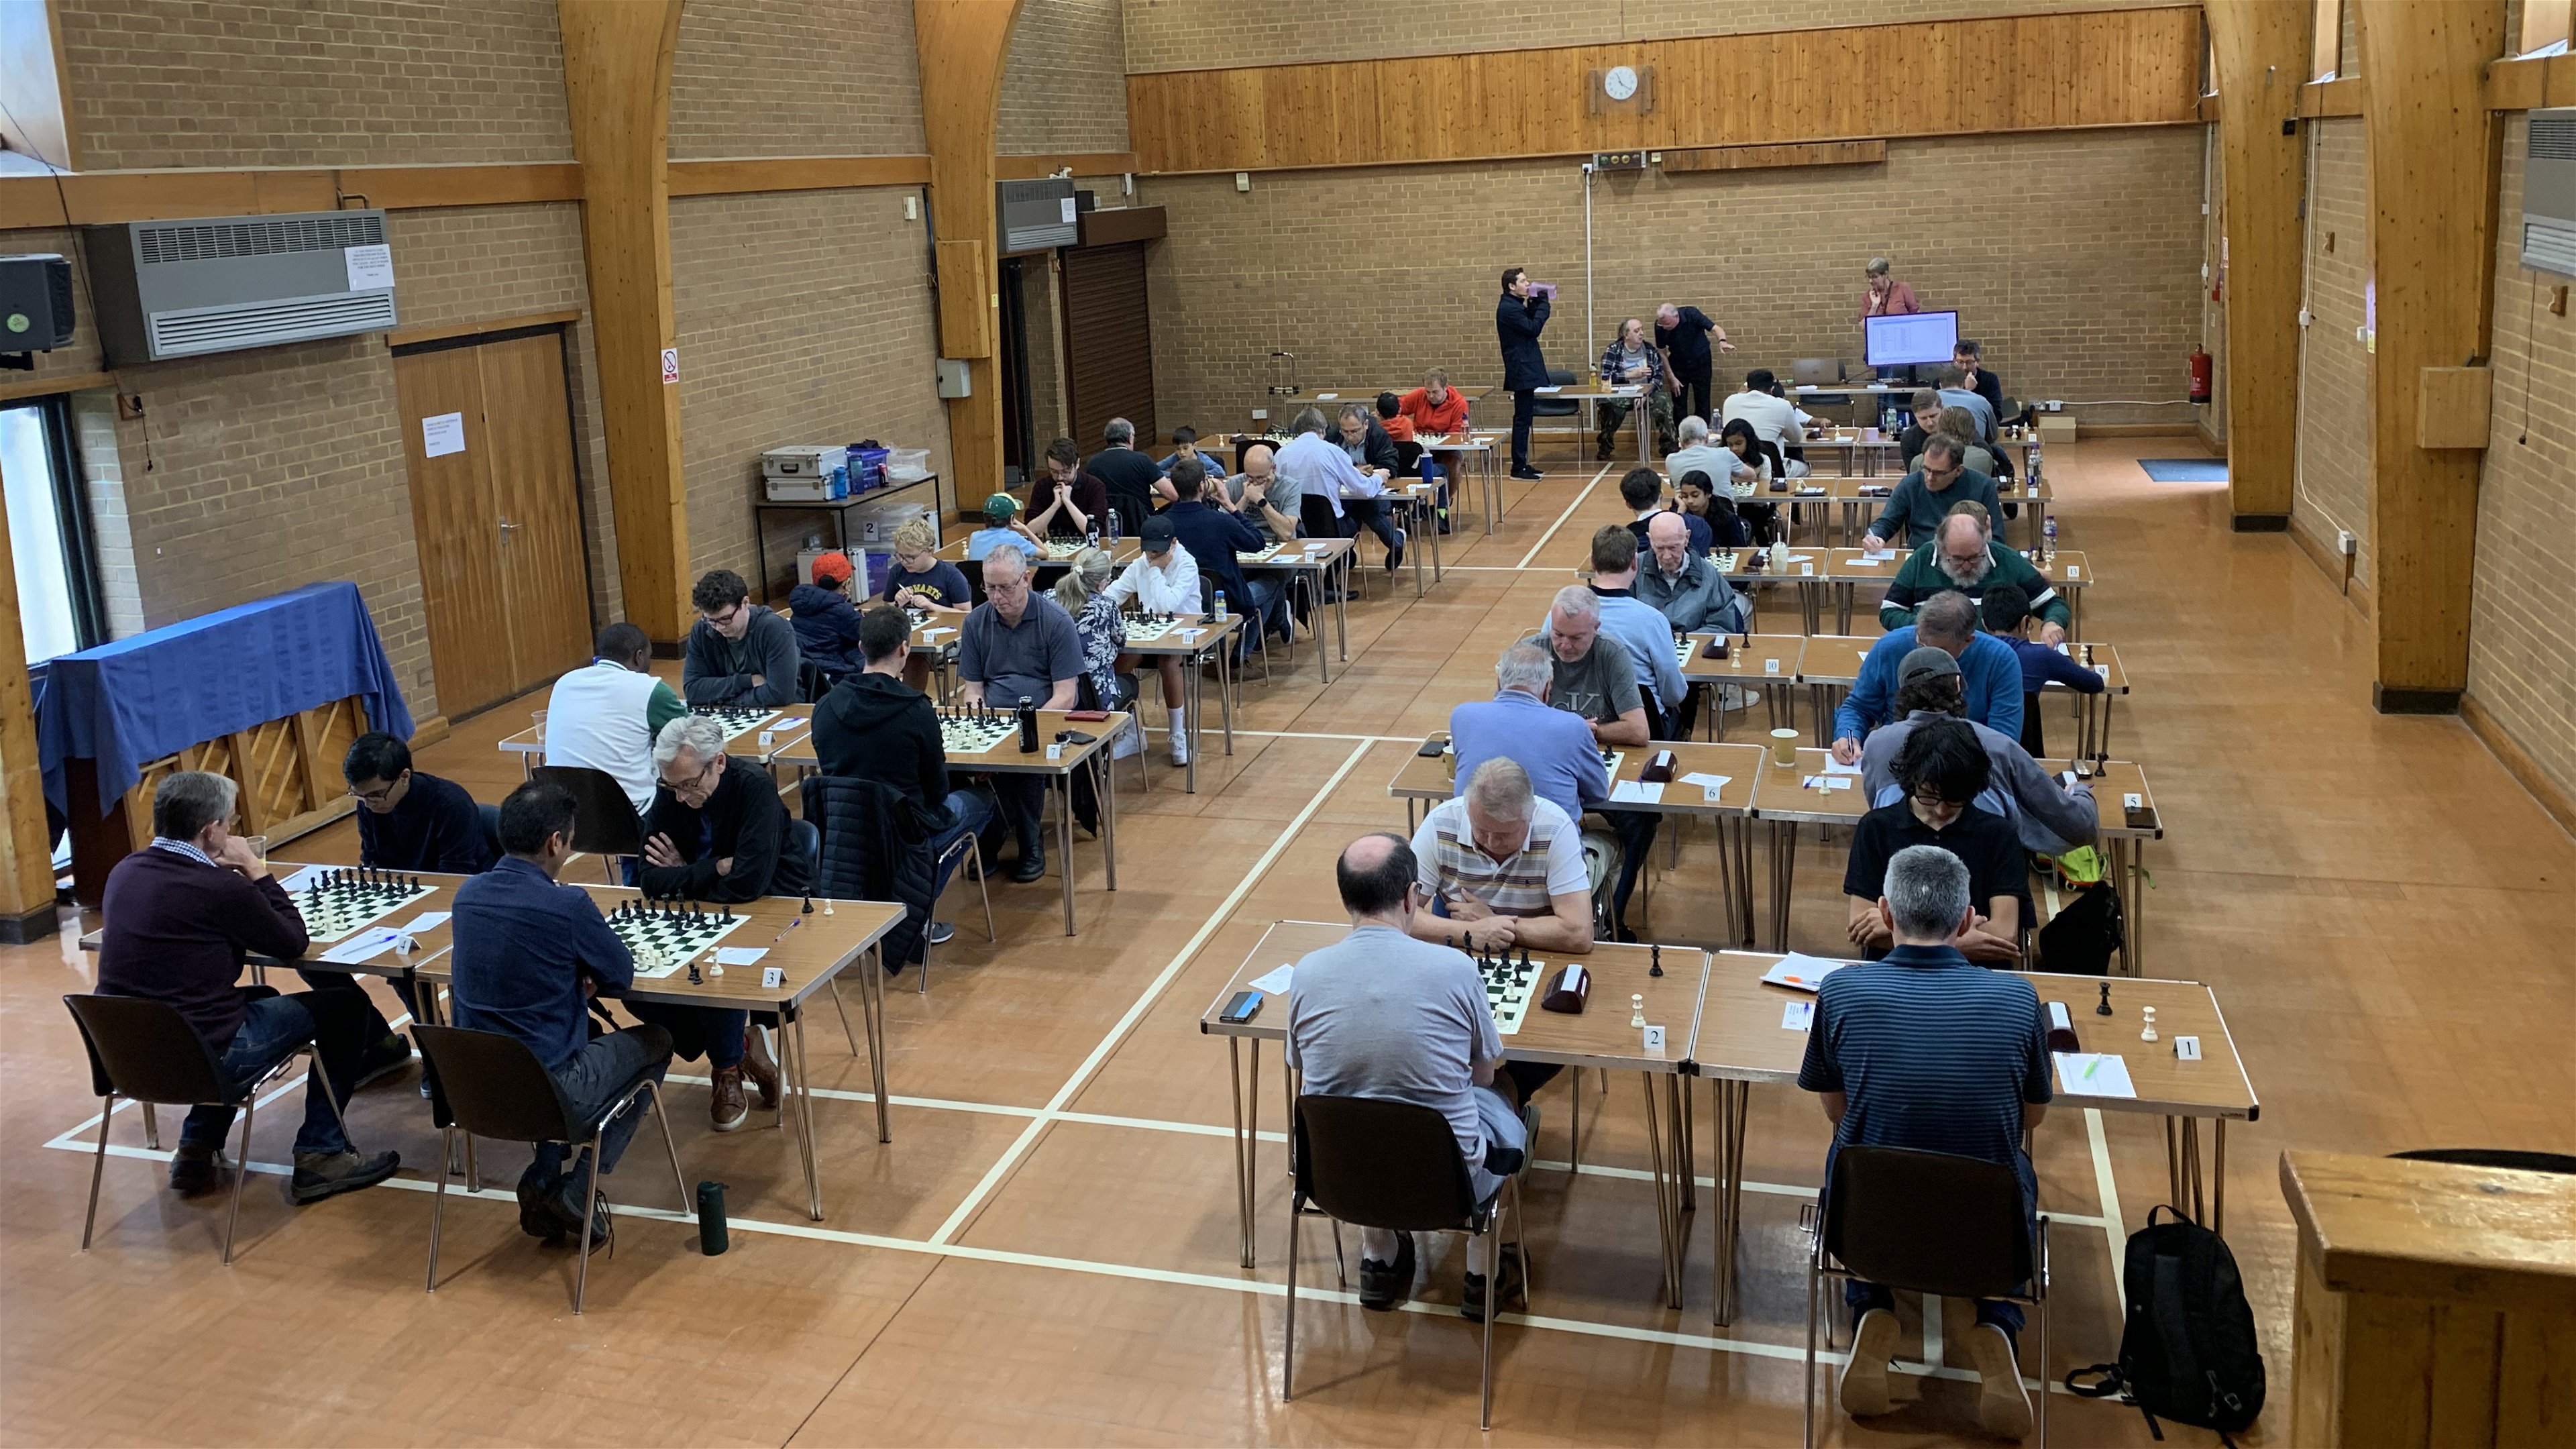 Camberley Chess Club